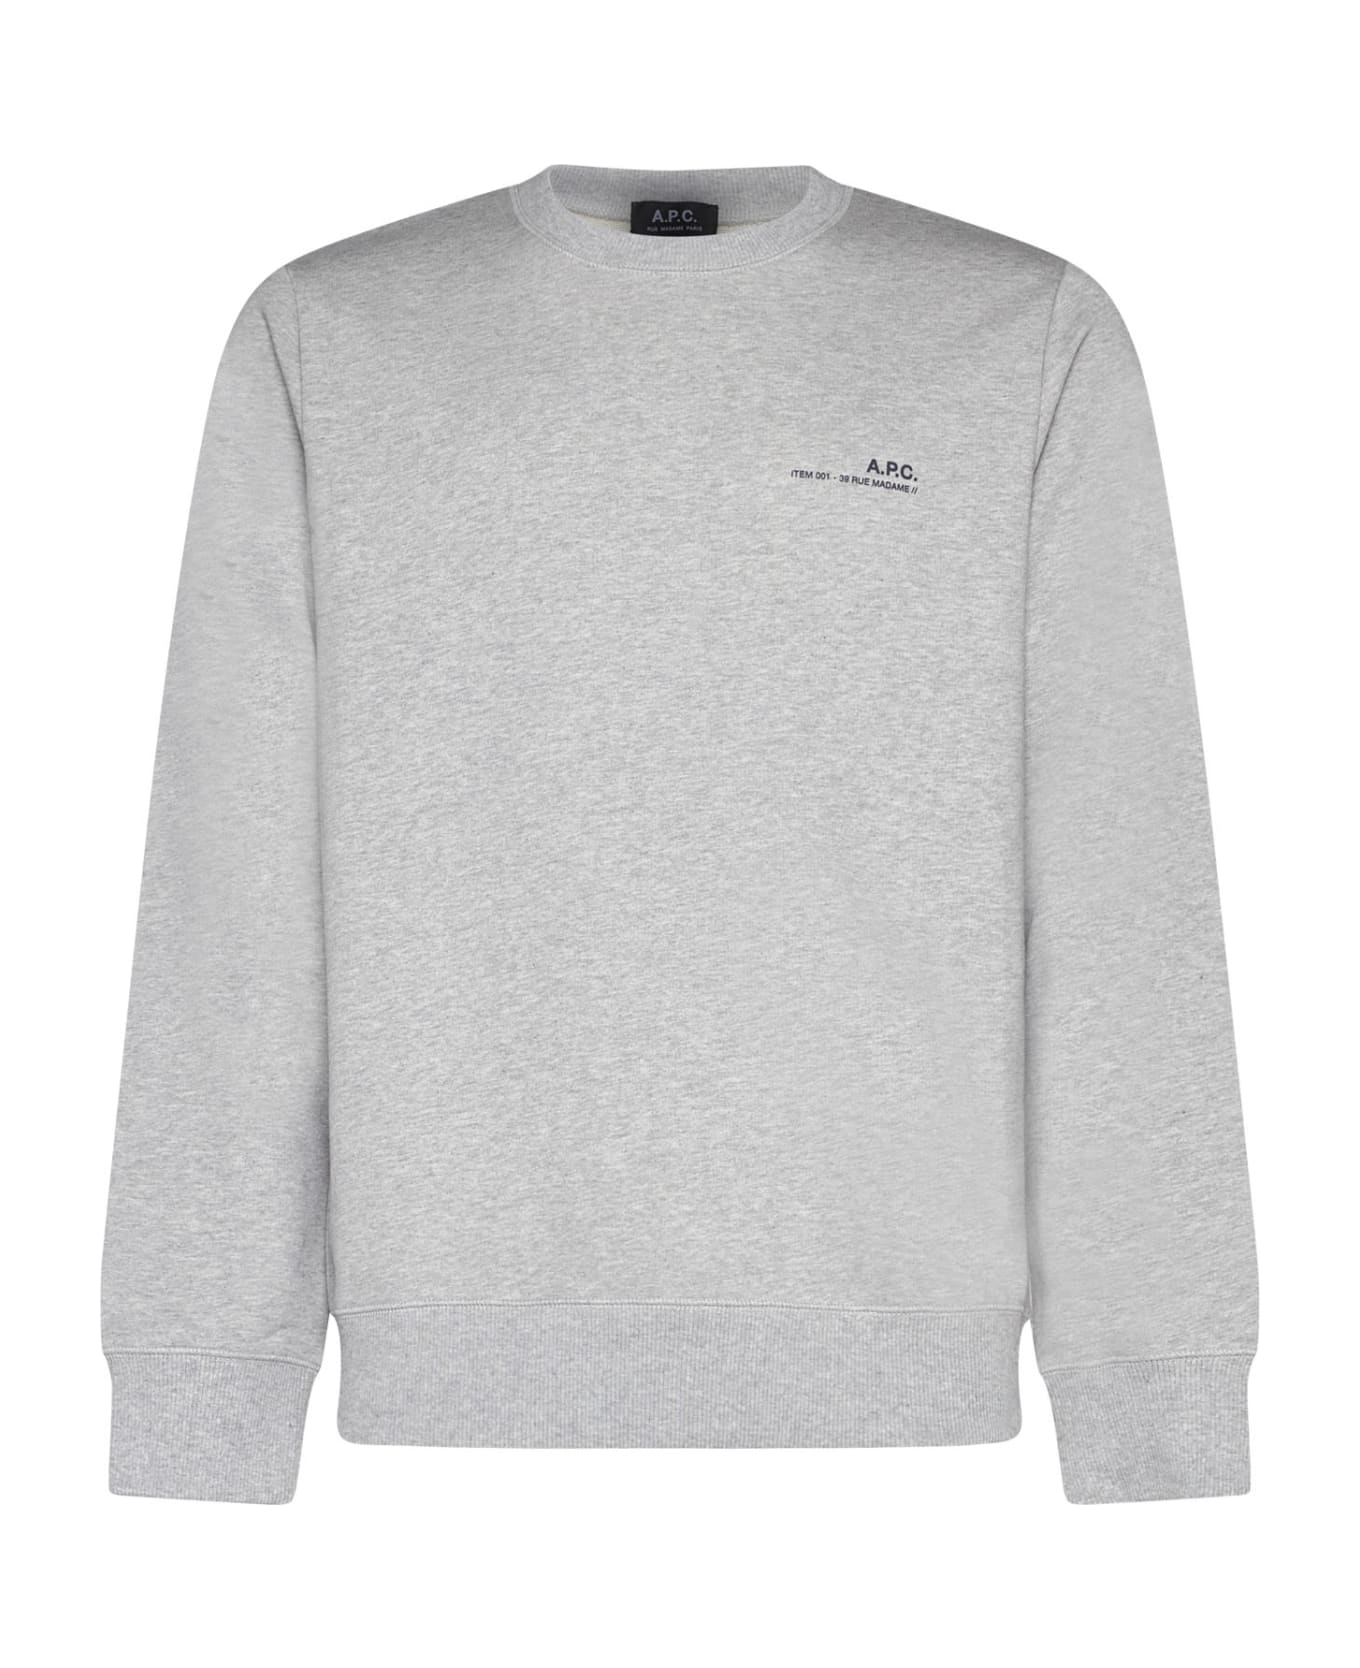 A.P.C. Sweatshirt With Logo - Heathered light grey フリース